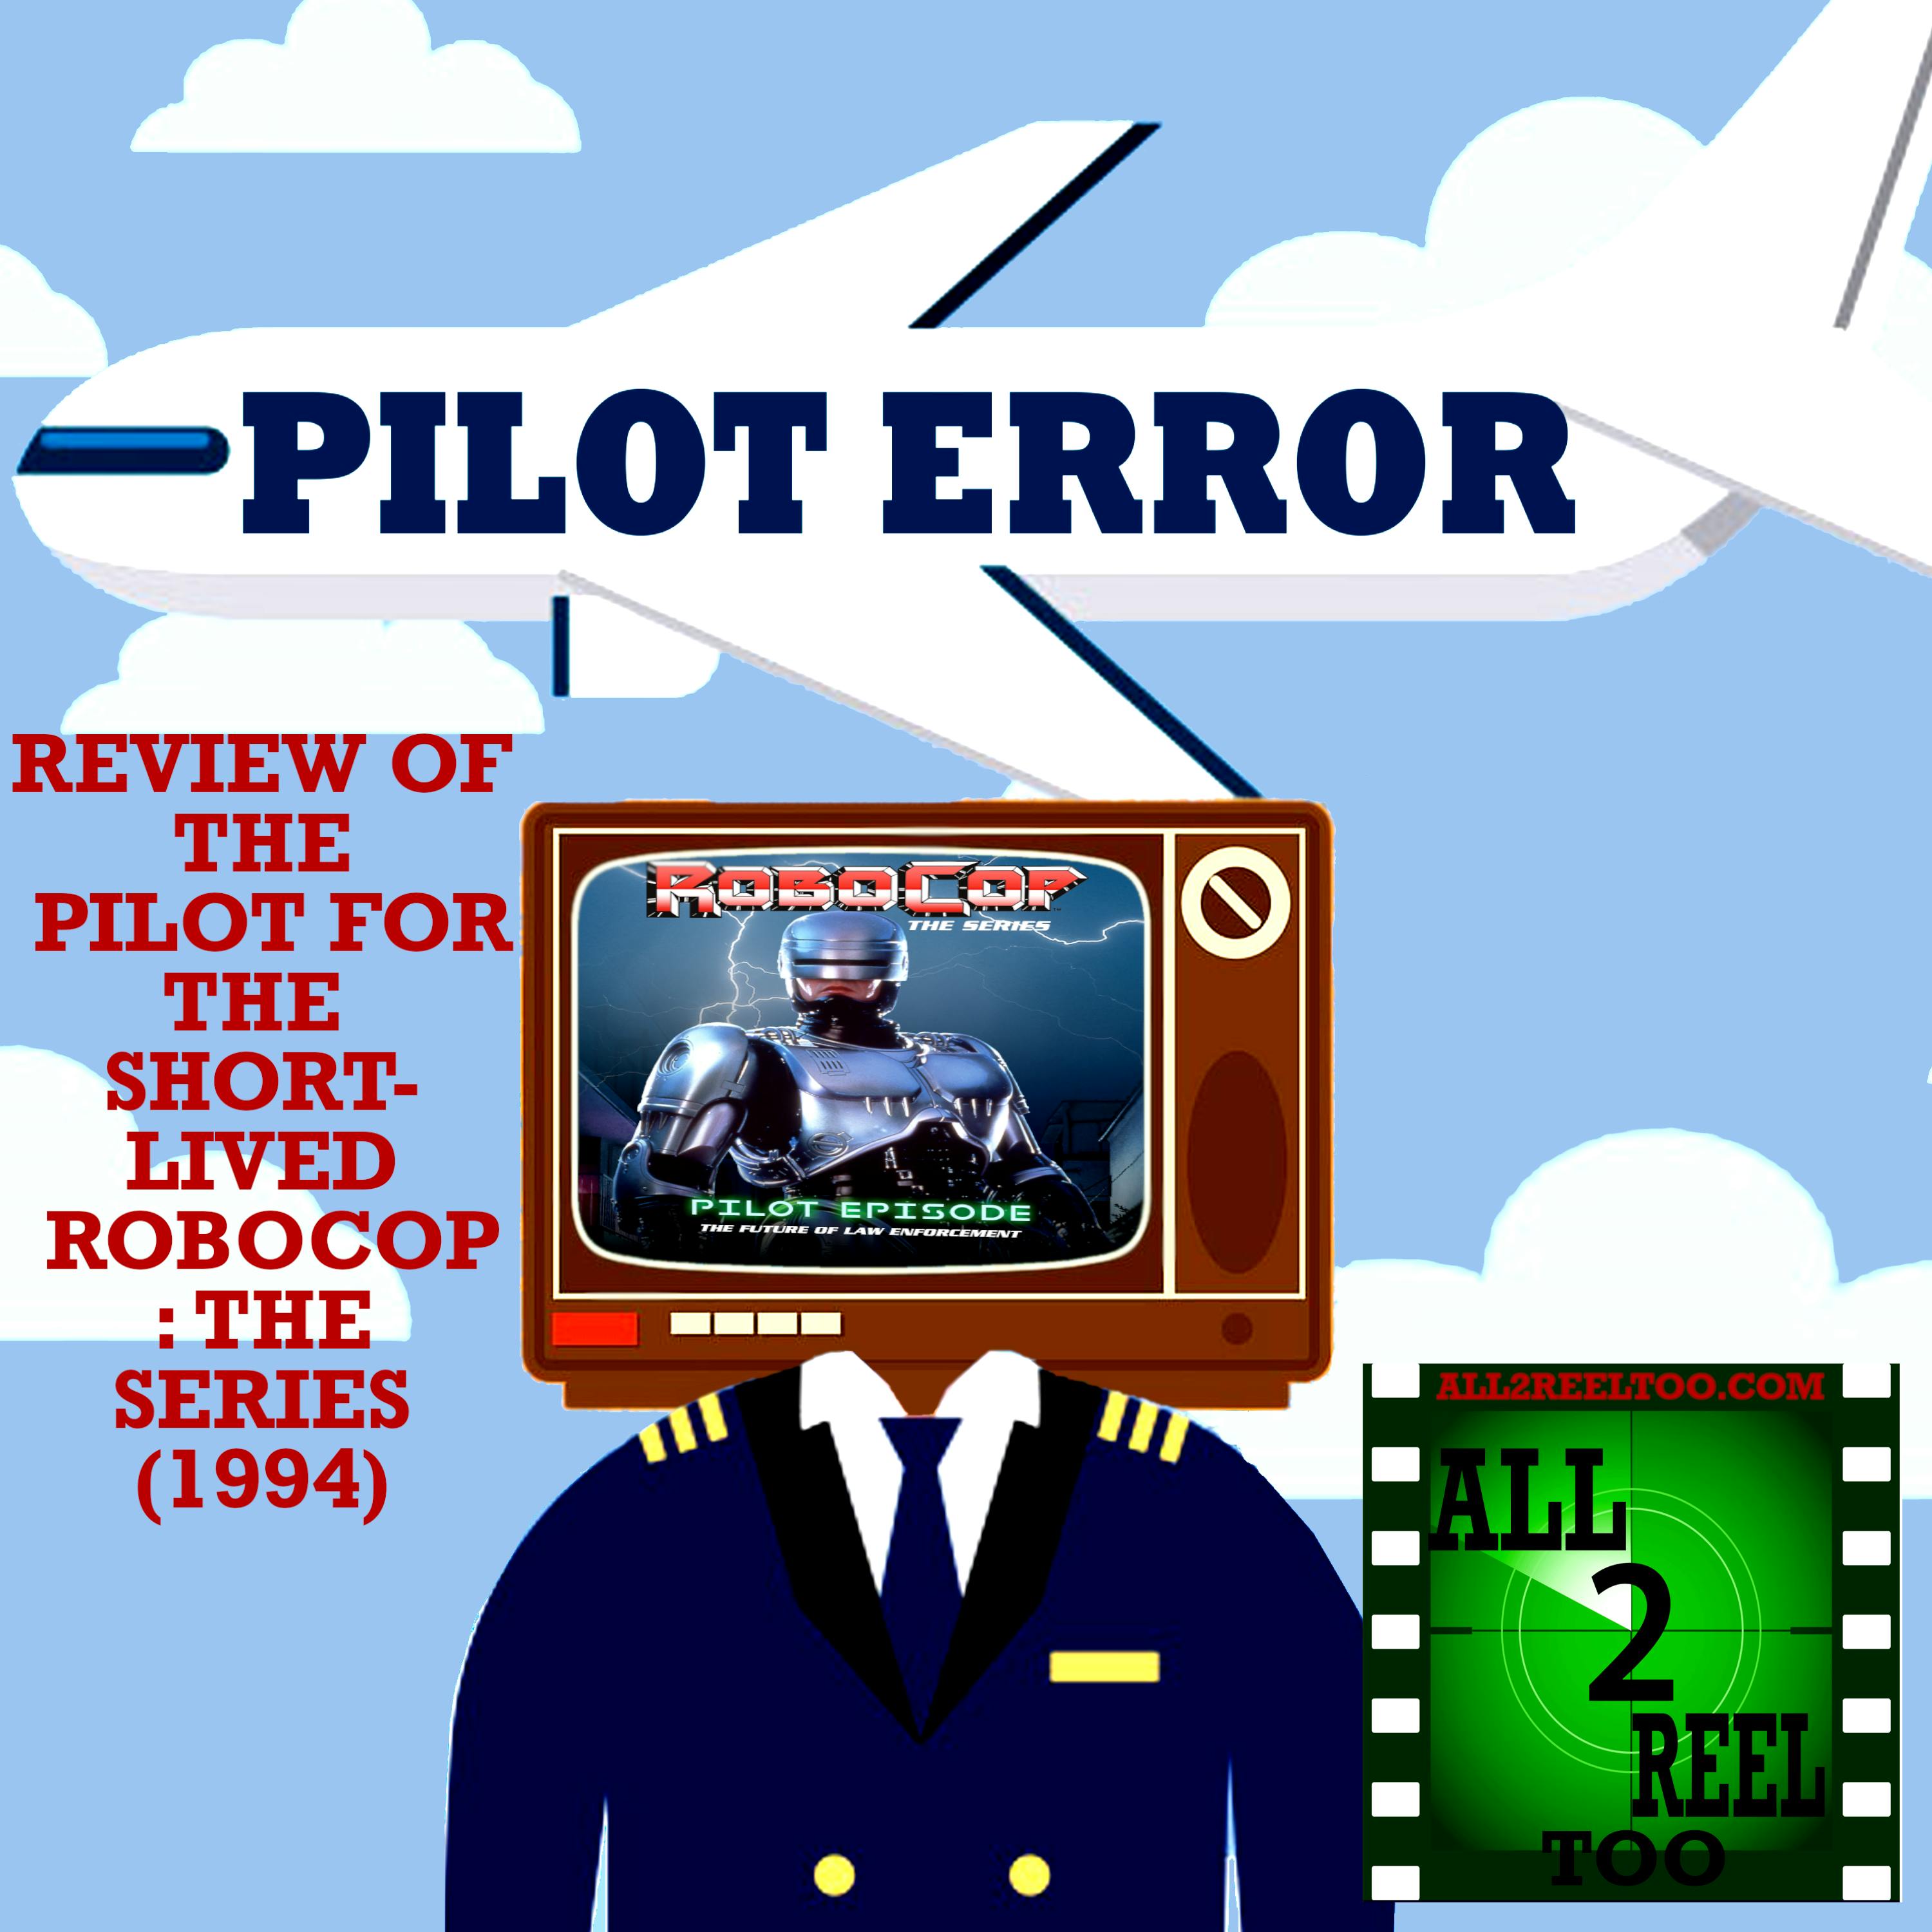 ROBOCOP : THE SERIES (1994) - PILOT ERROR REVIEW